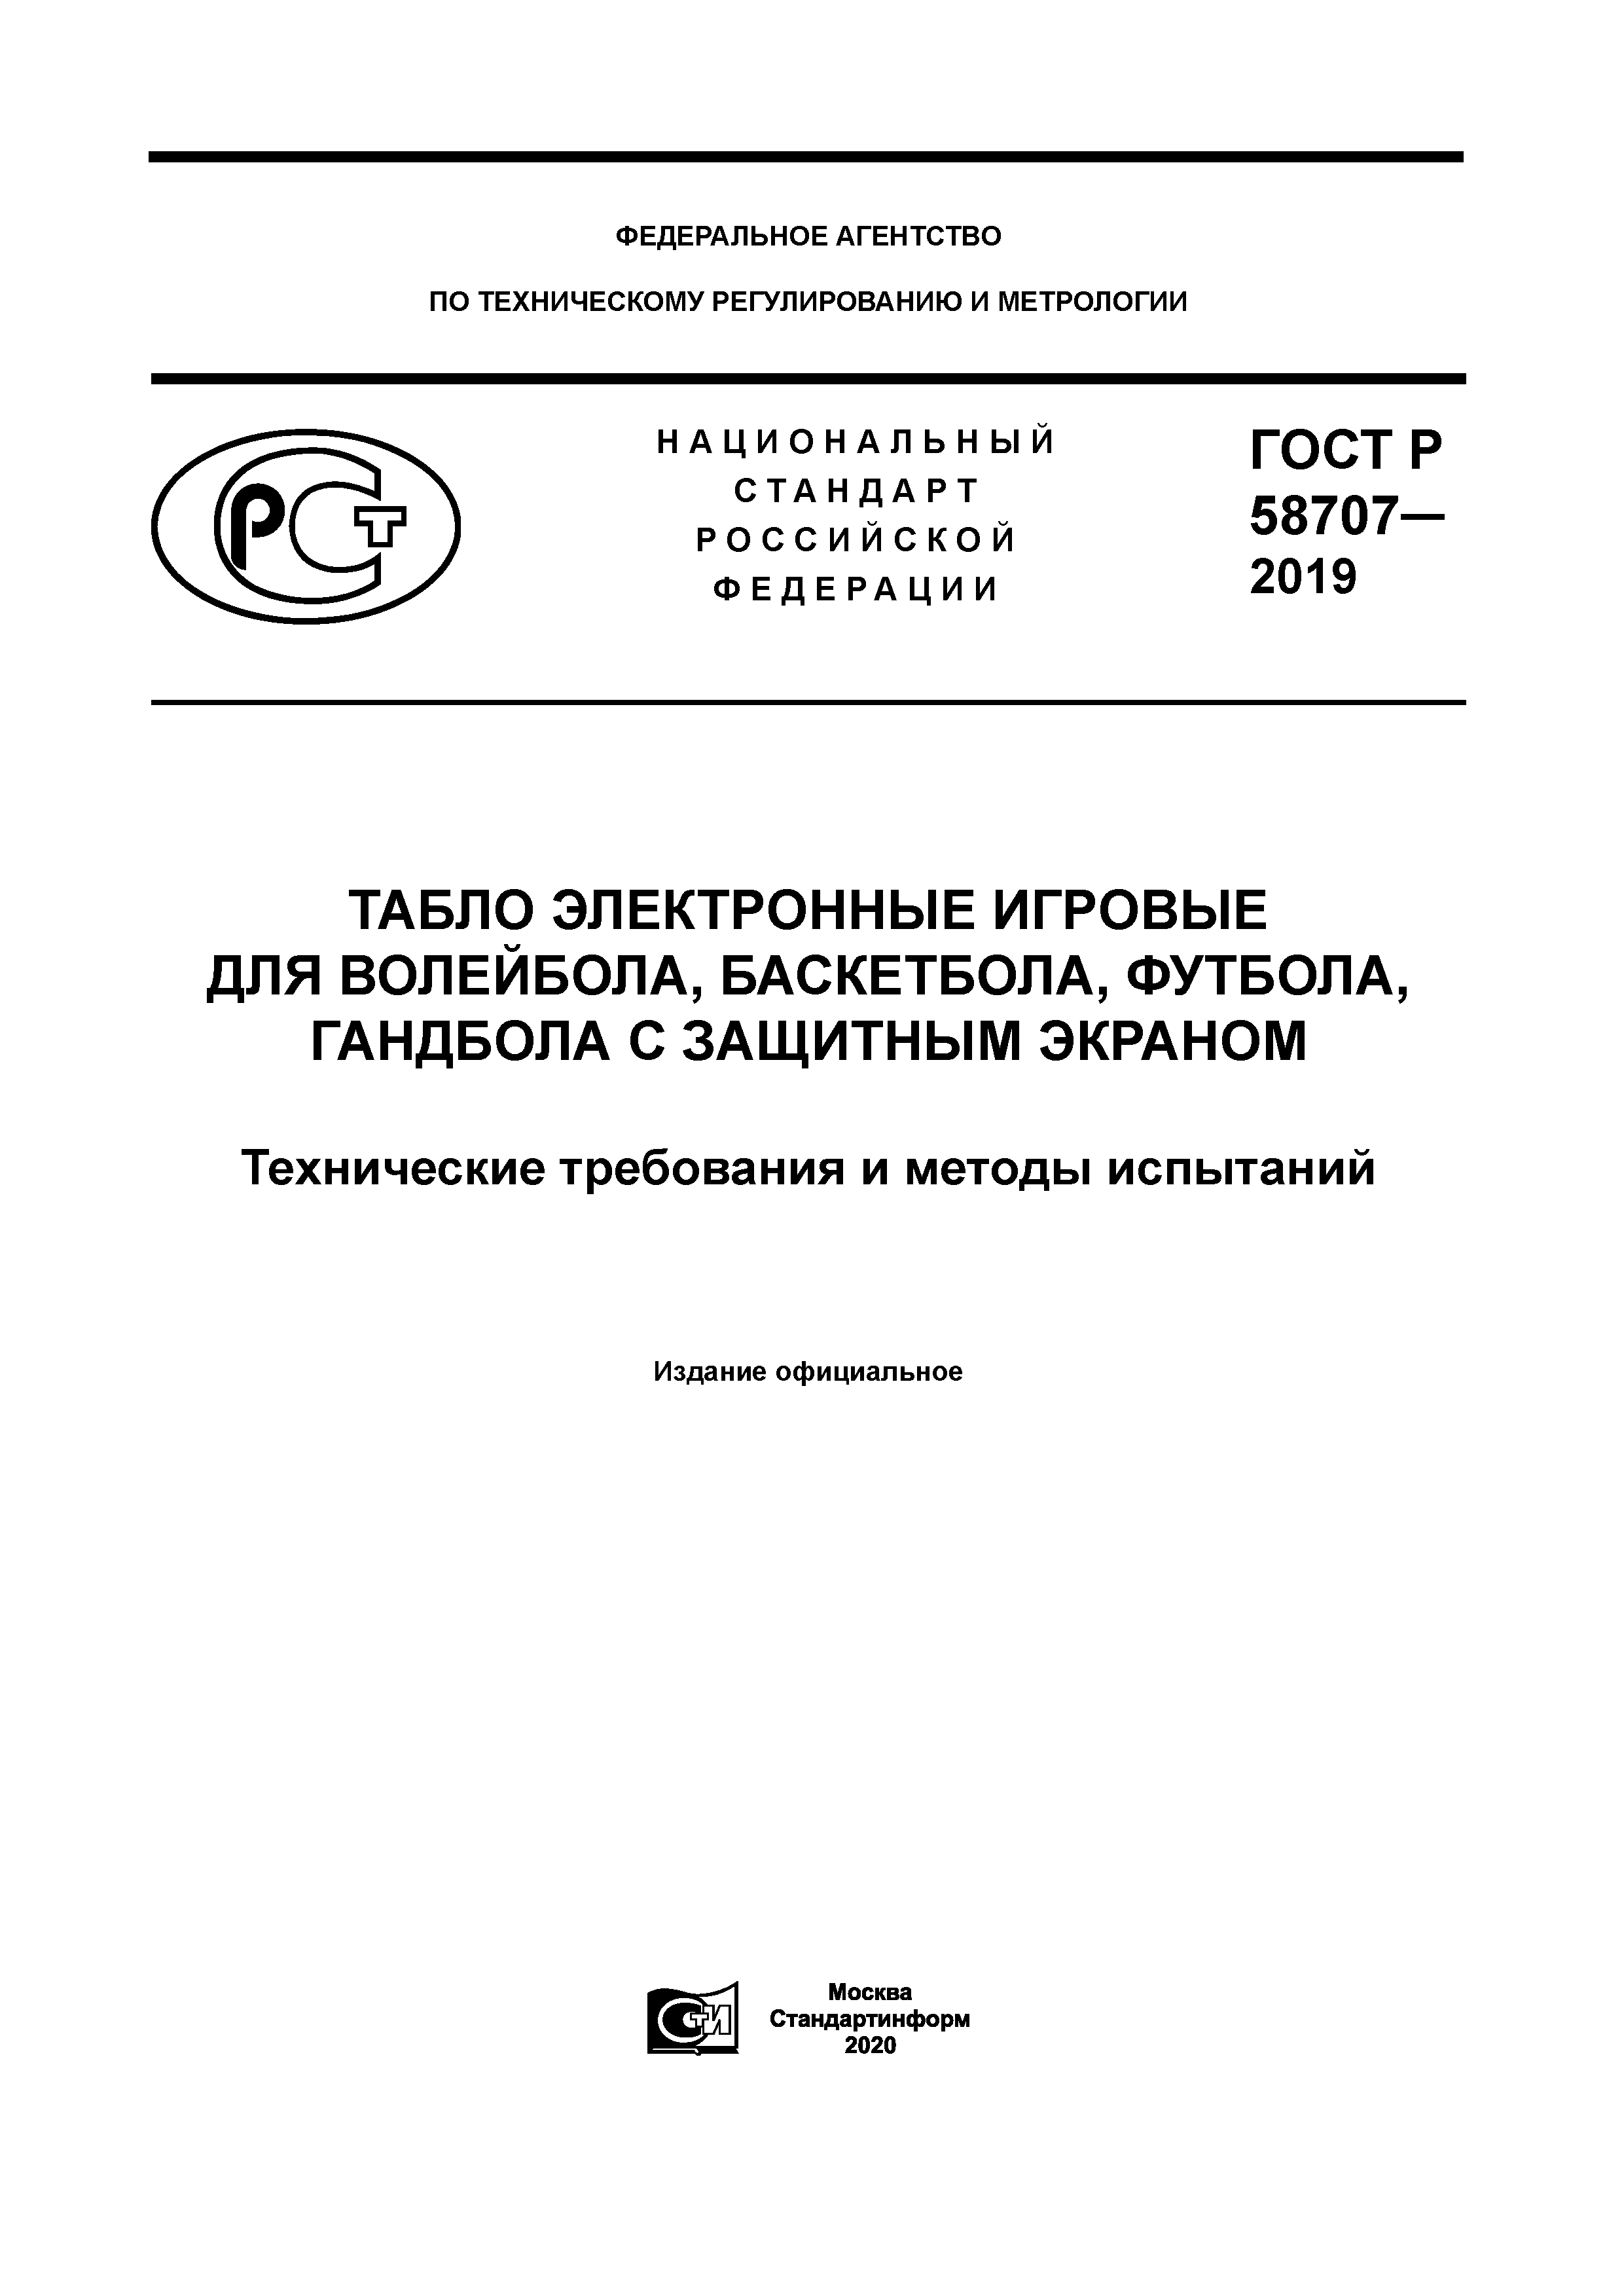 ГОСТ Р 58707-2019